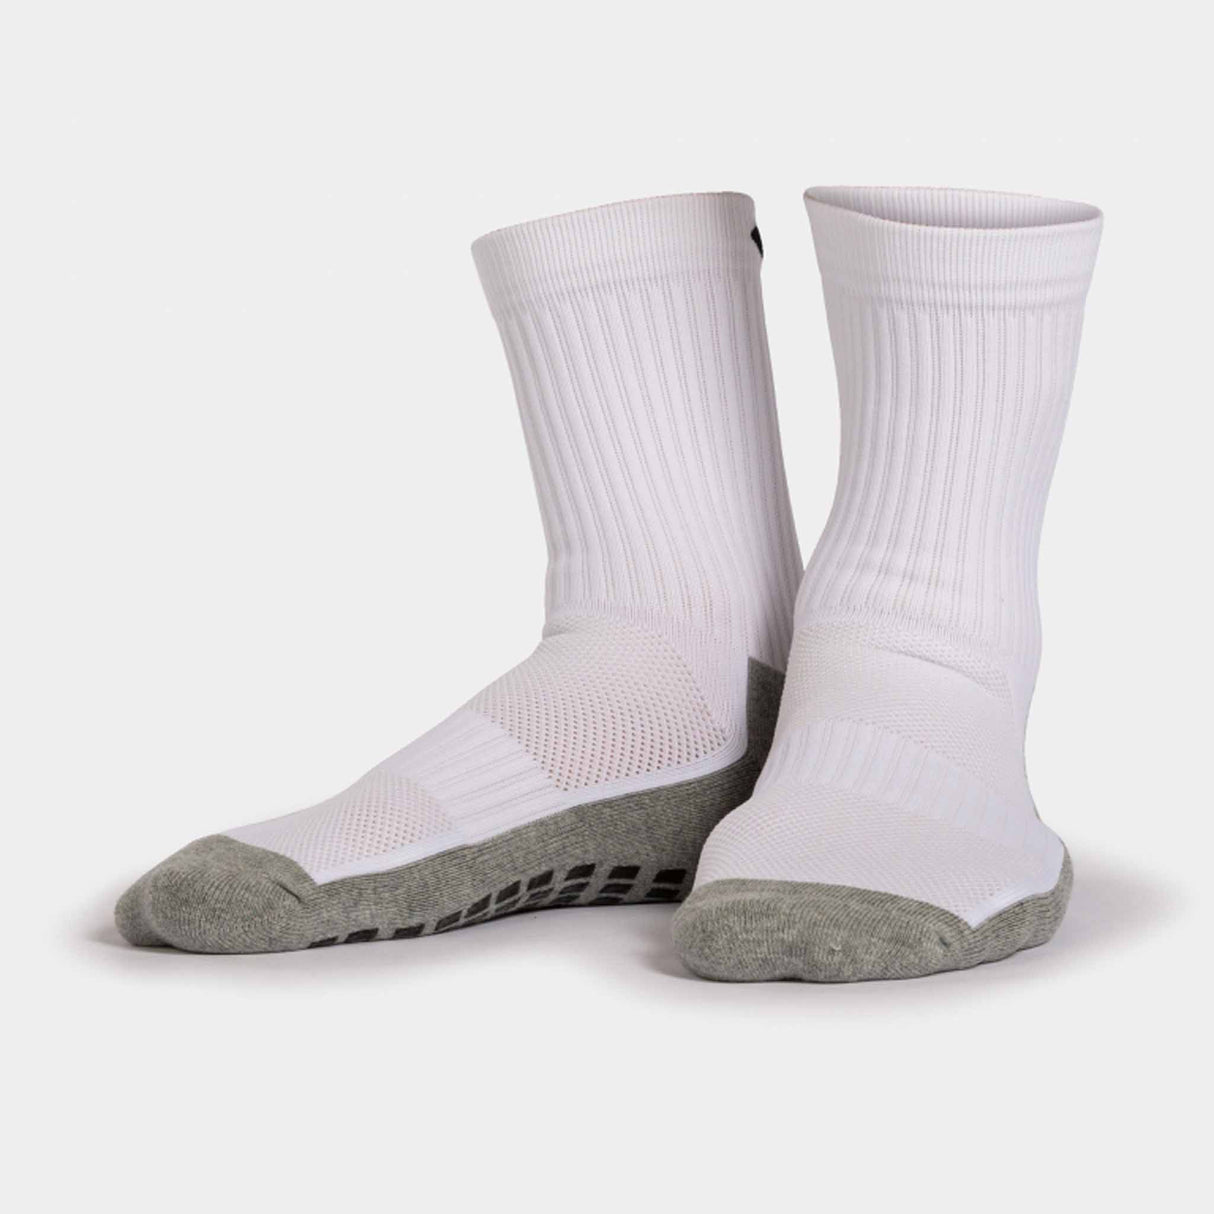 Joma Anti-Slip Crew chaussettes de soccer antidérapantes - Blanc